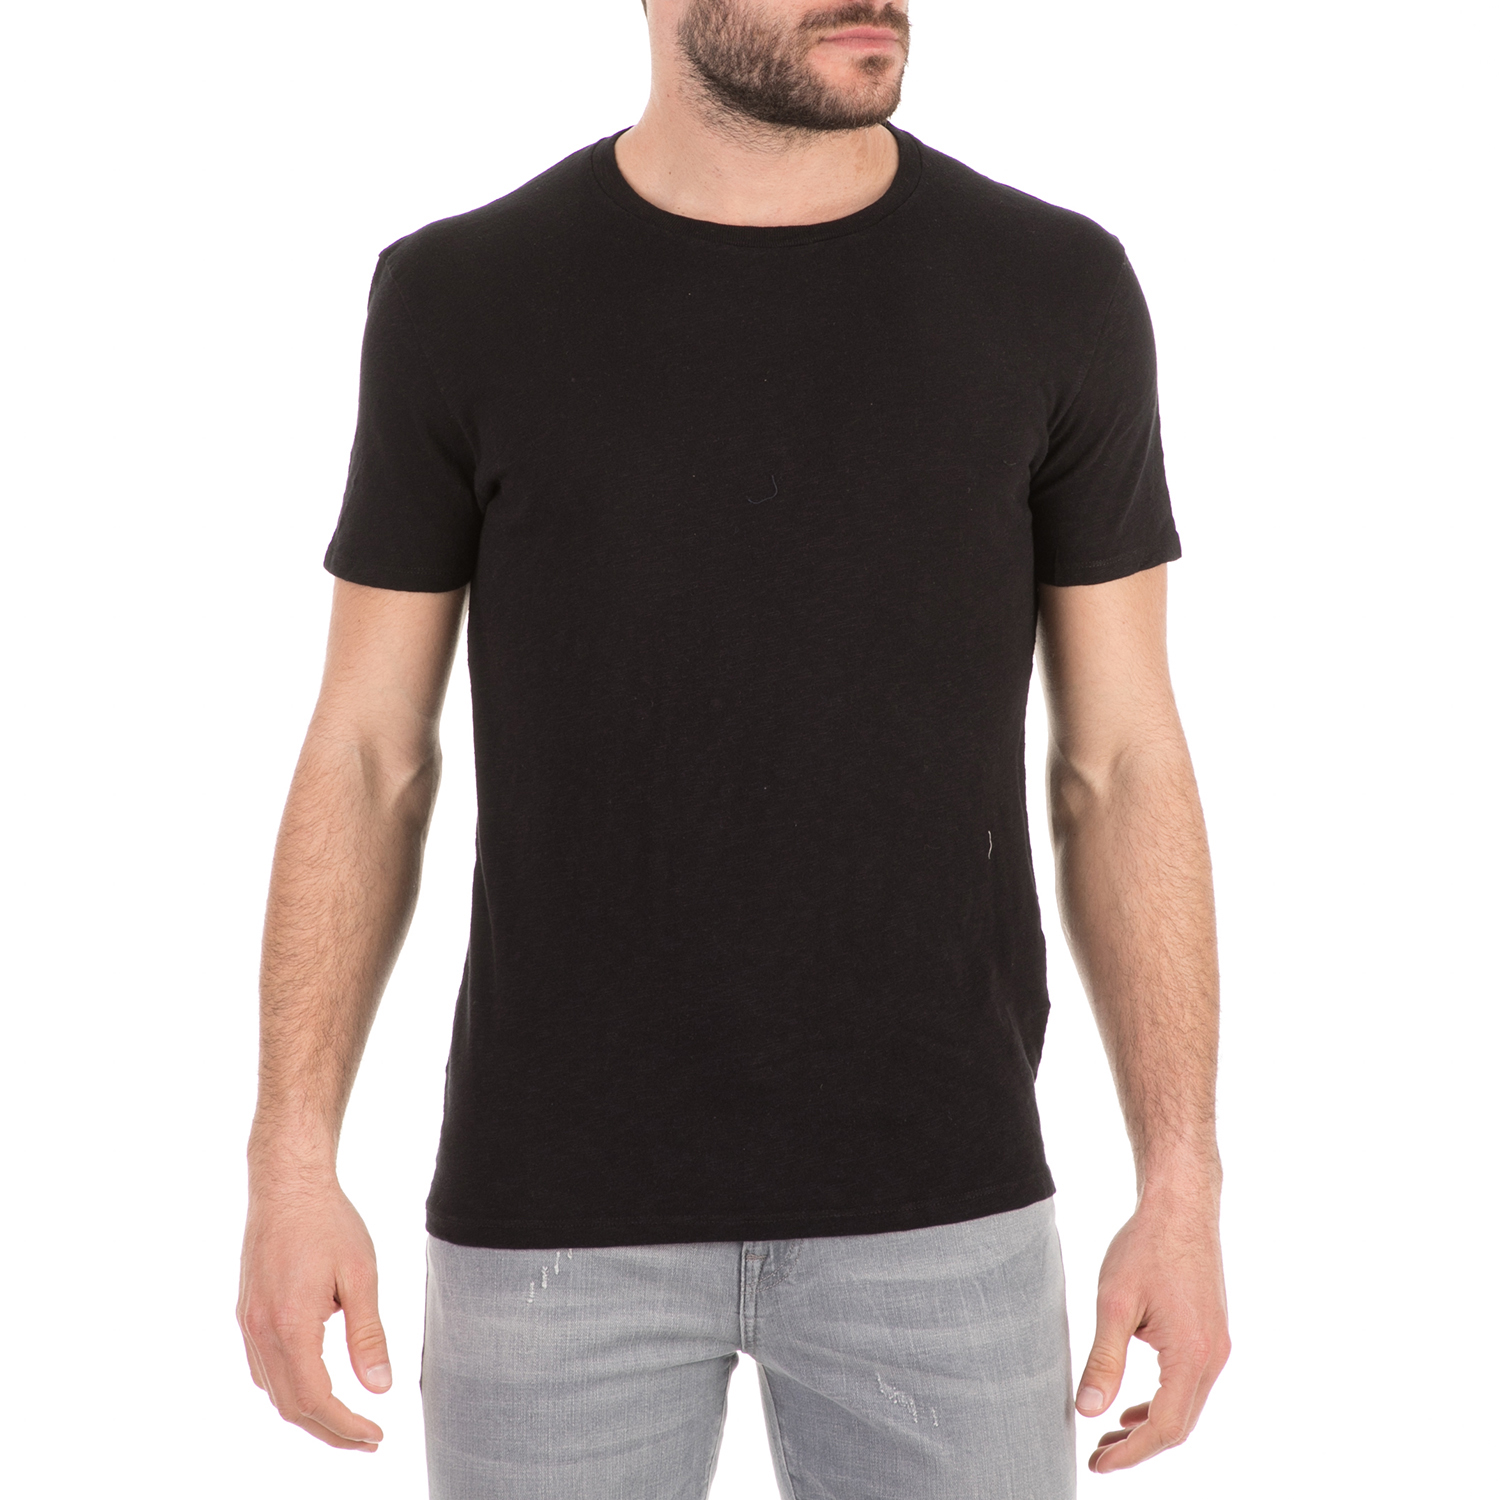 AMERICAN VINTAGE - Ανδρικό t-shirt AMERICAN VINTAGE μαύρο Ανδρικά/Ρούχα/Μπλούζες/Κοντομάνικες